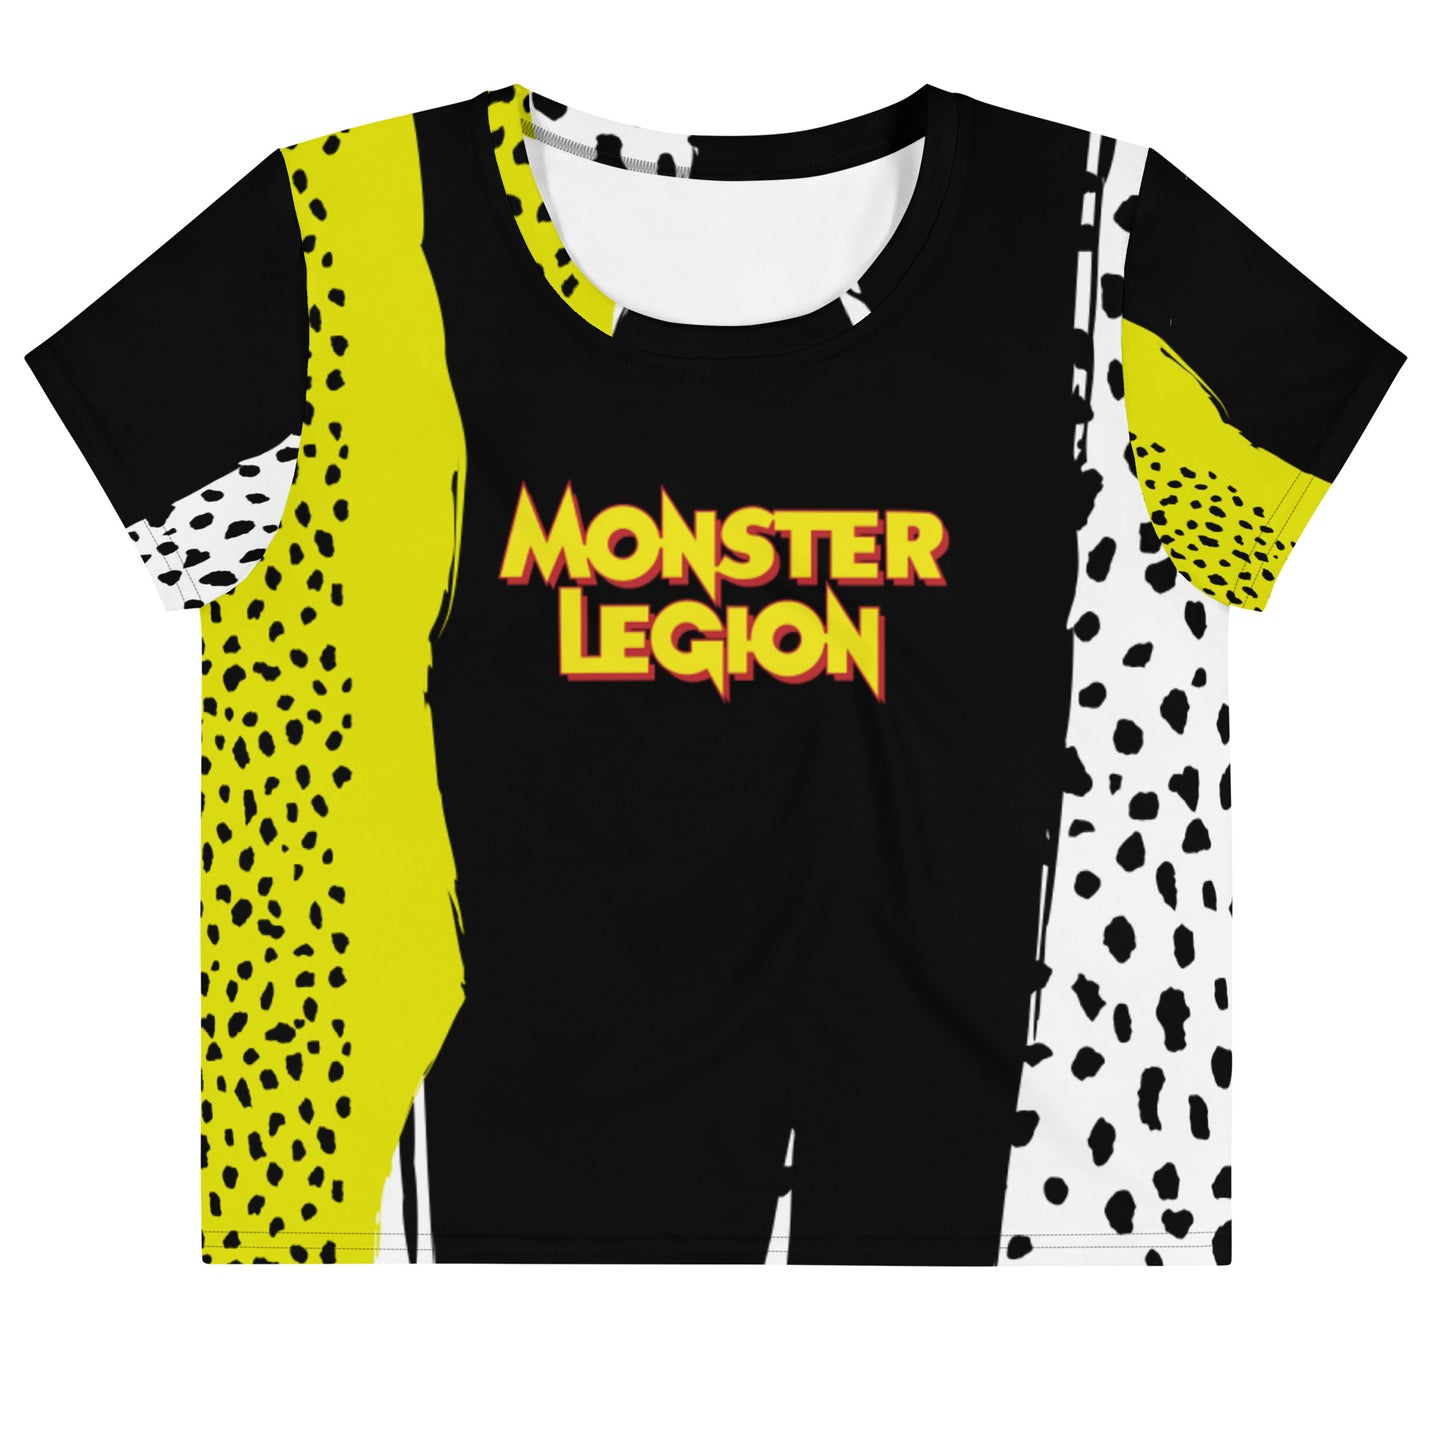 Monster Legion All-Over Print Crop Tee